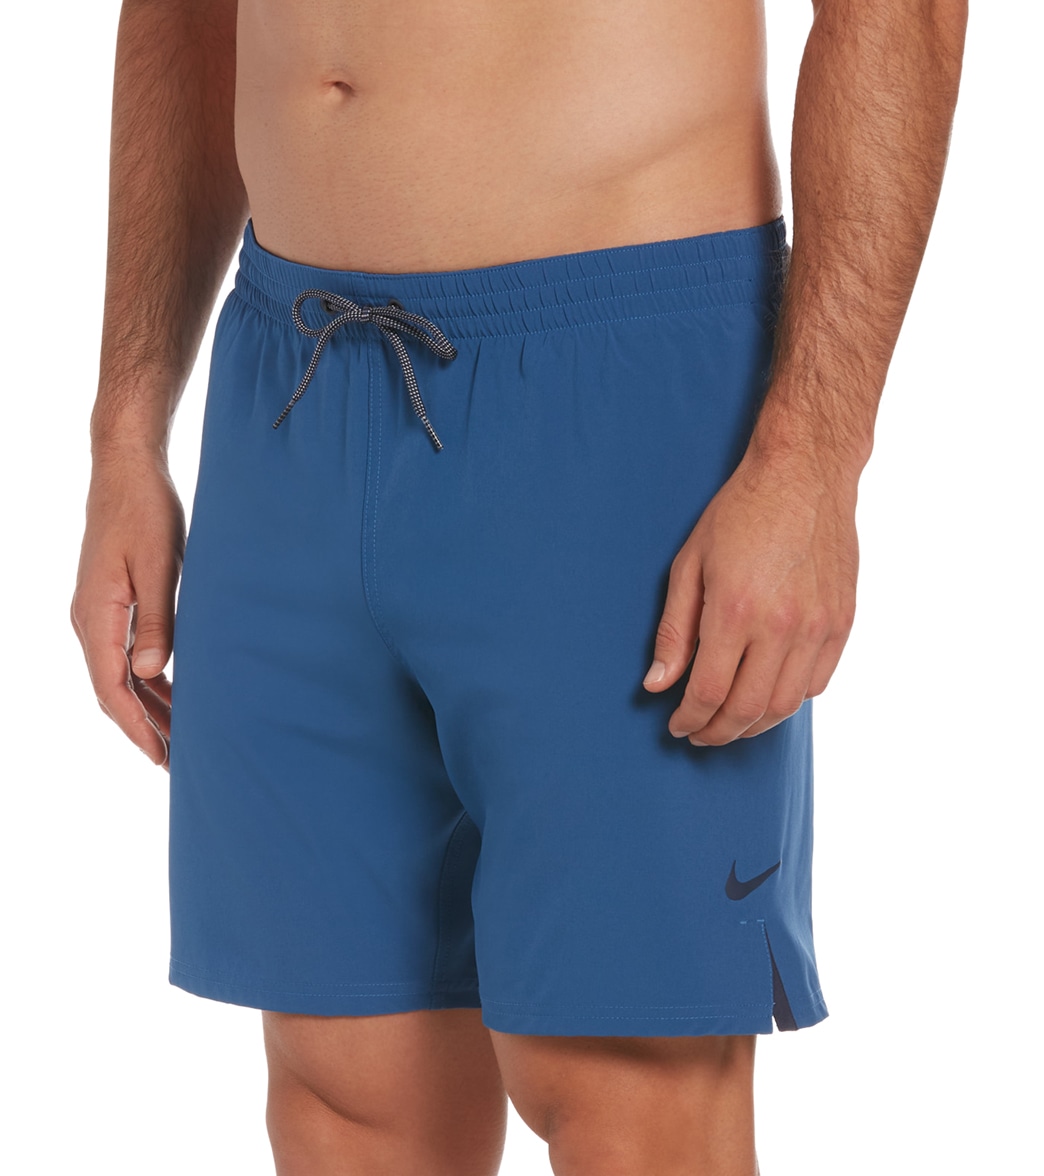 Nike Men's 18 Essential Vital Volley Short - Dark Marina Blue Small Polyester - Swimoutlet.com